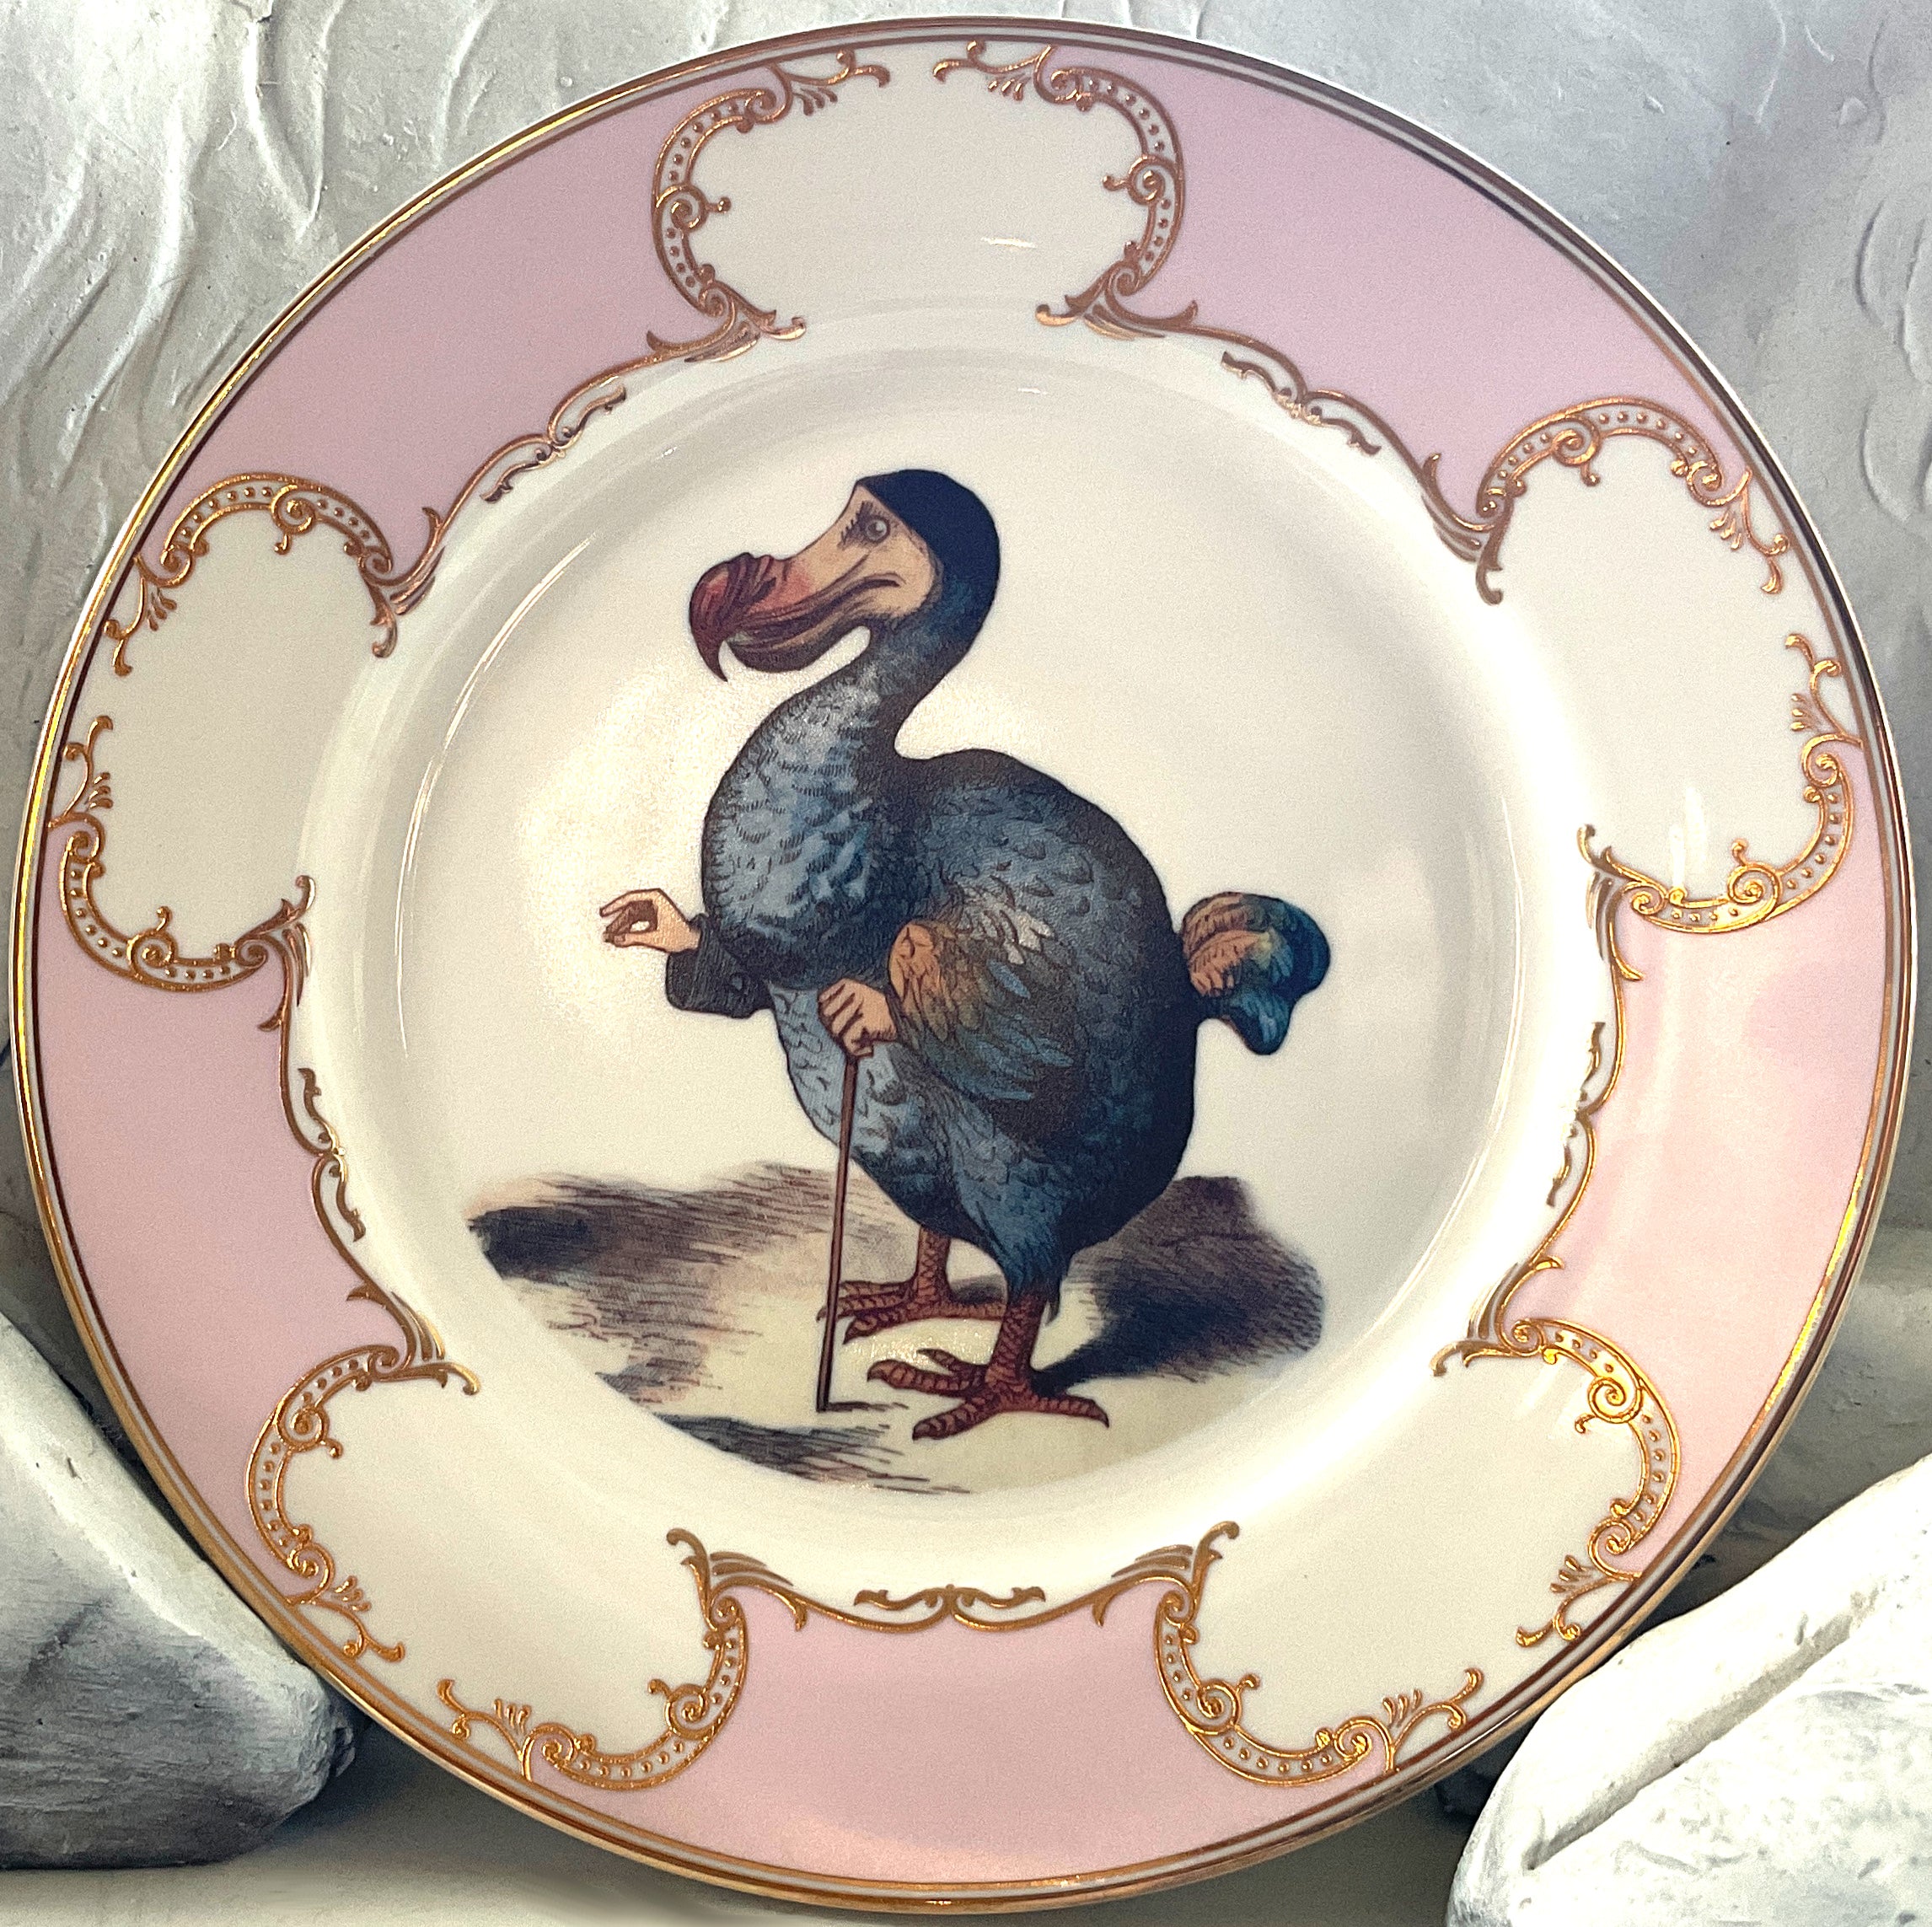 Alice and The Dodo Bird in Wonderland Tile